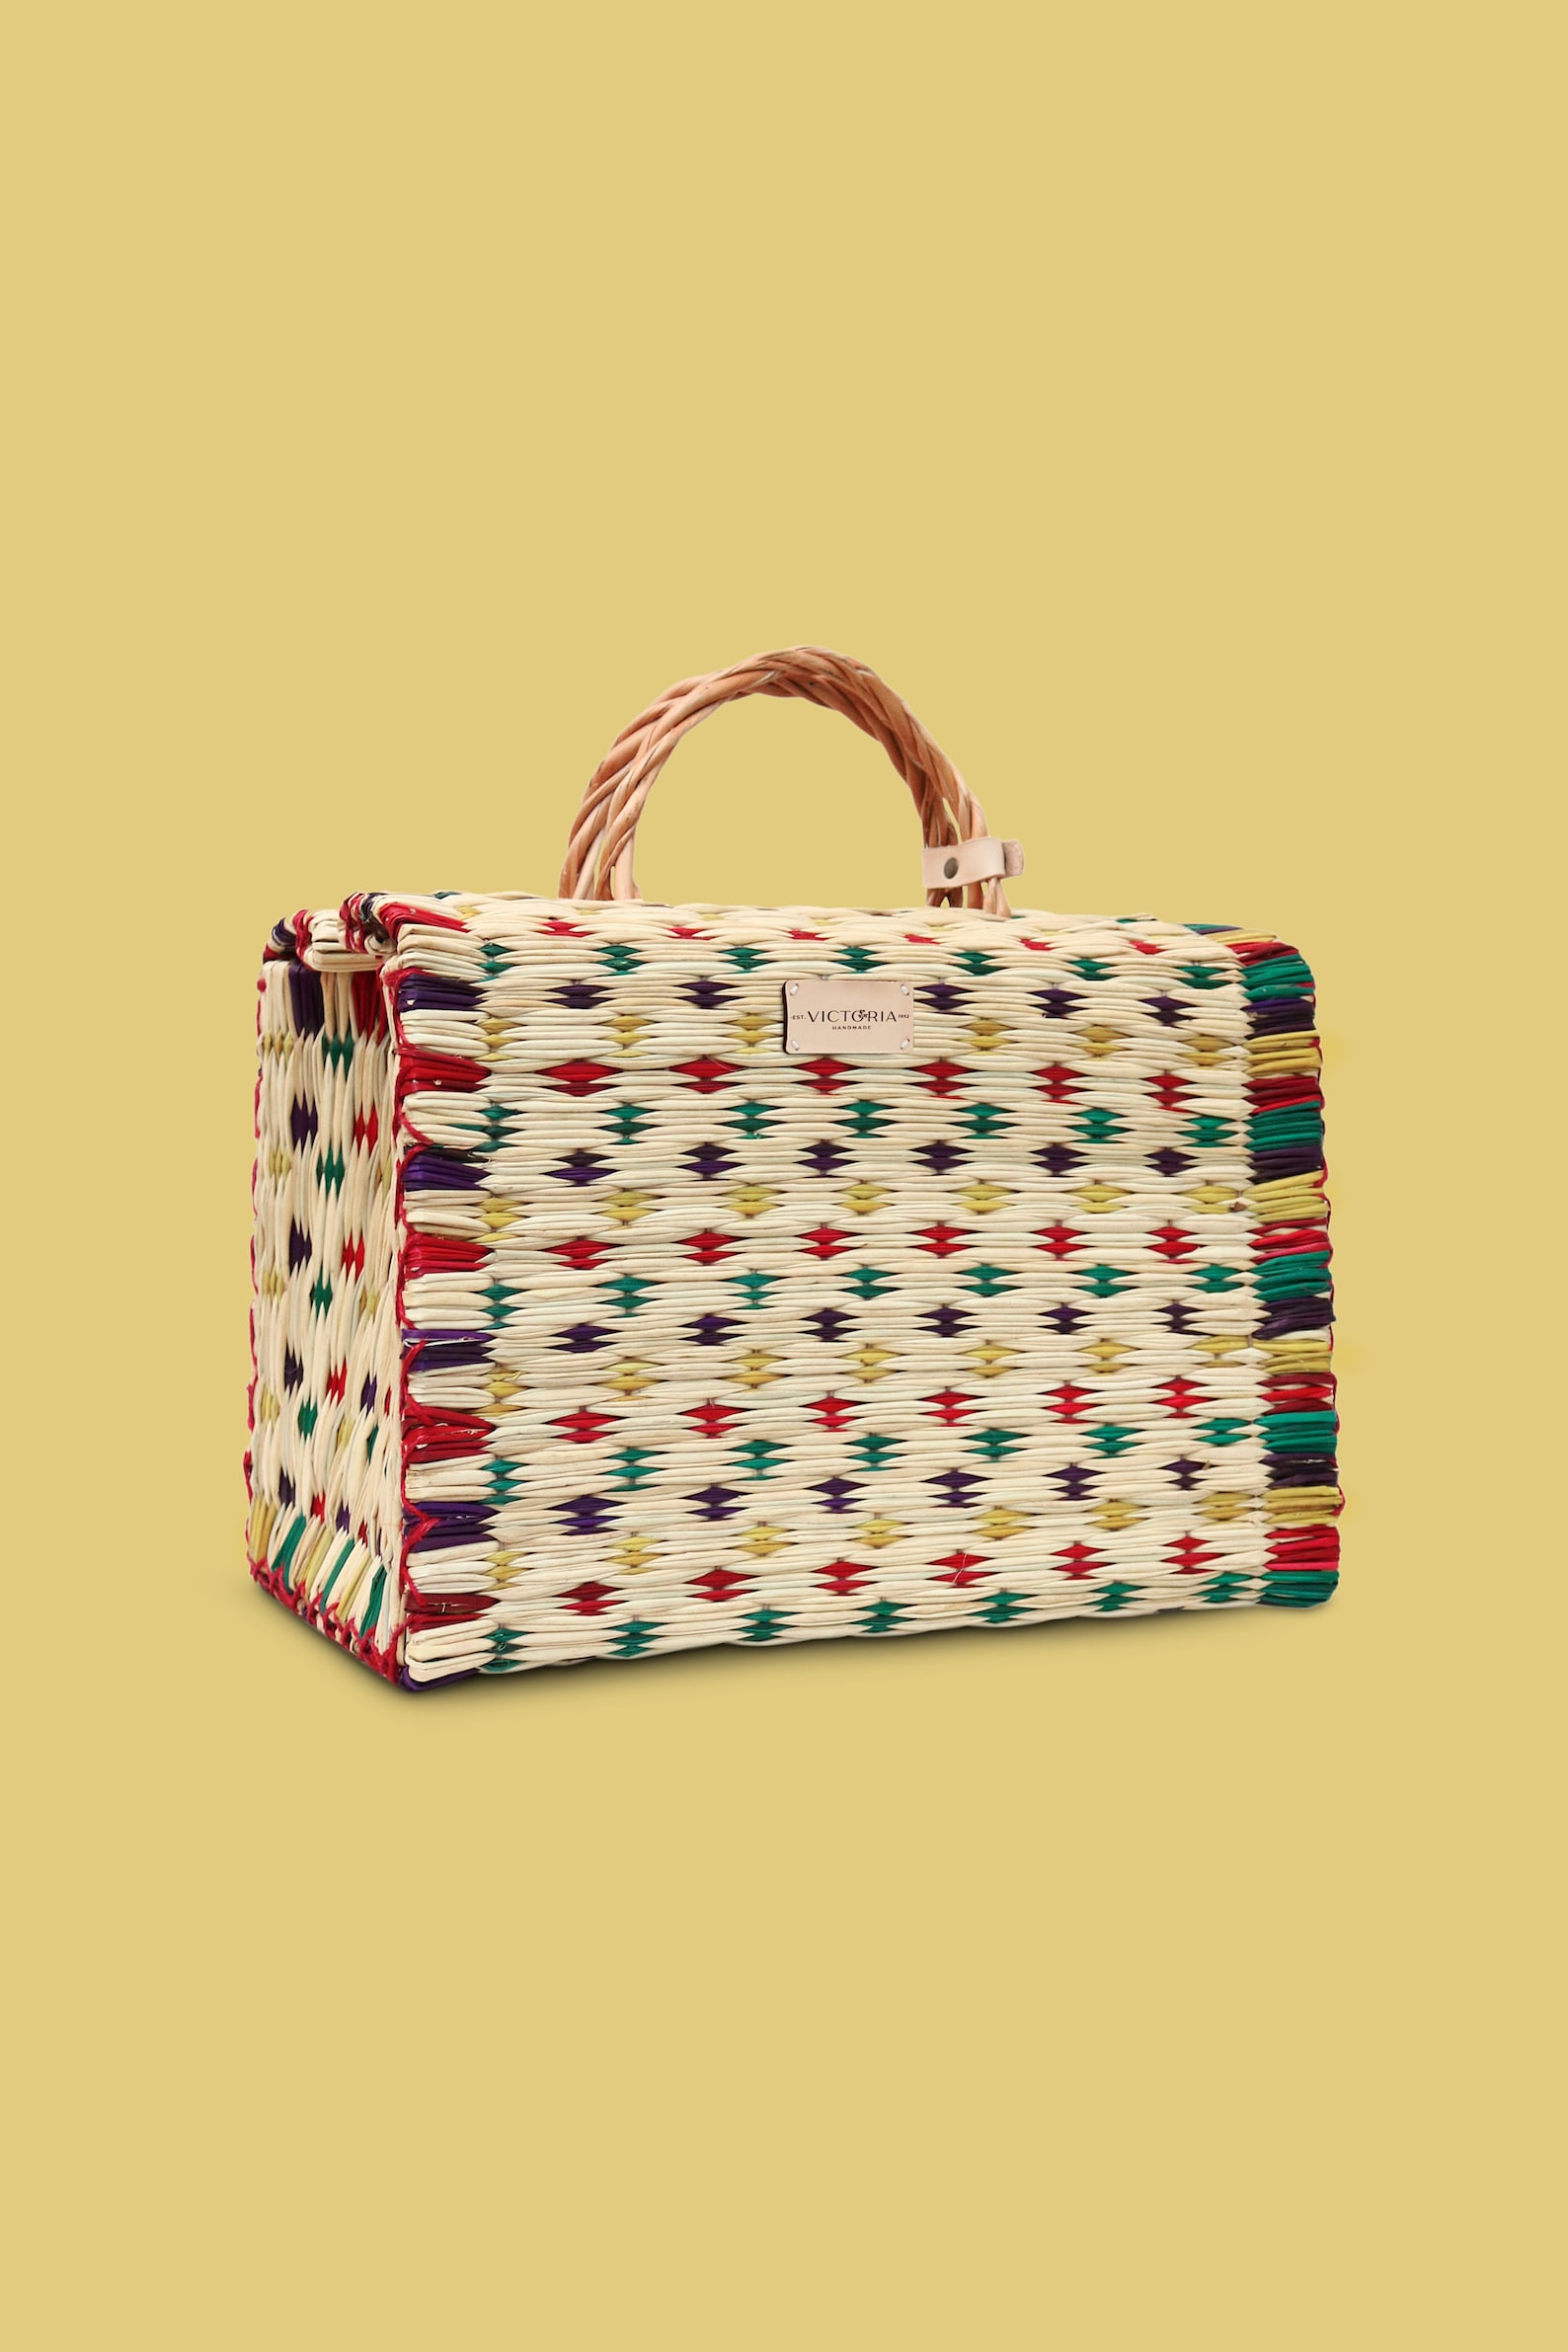 Handmade Wicker Vegan Straw Basket Handbag for Women Made in